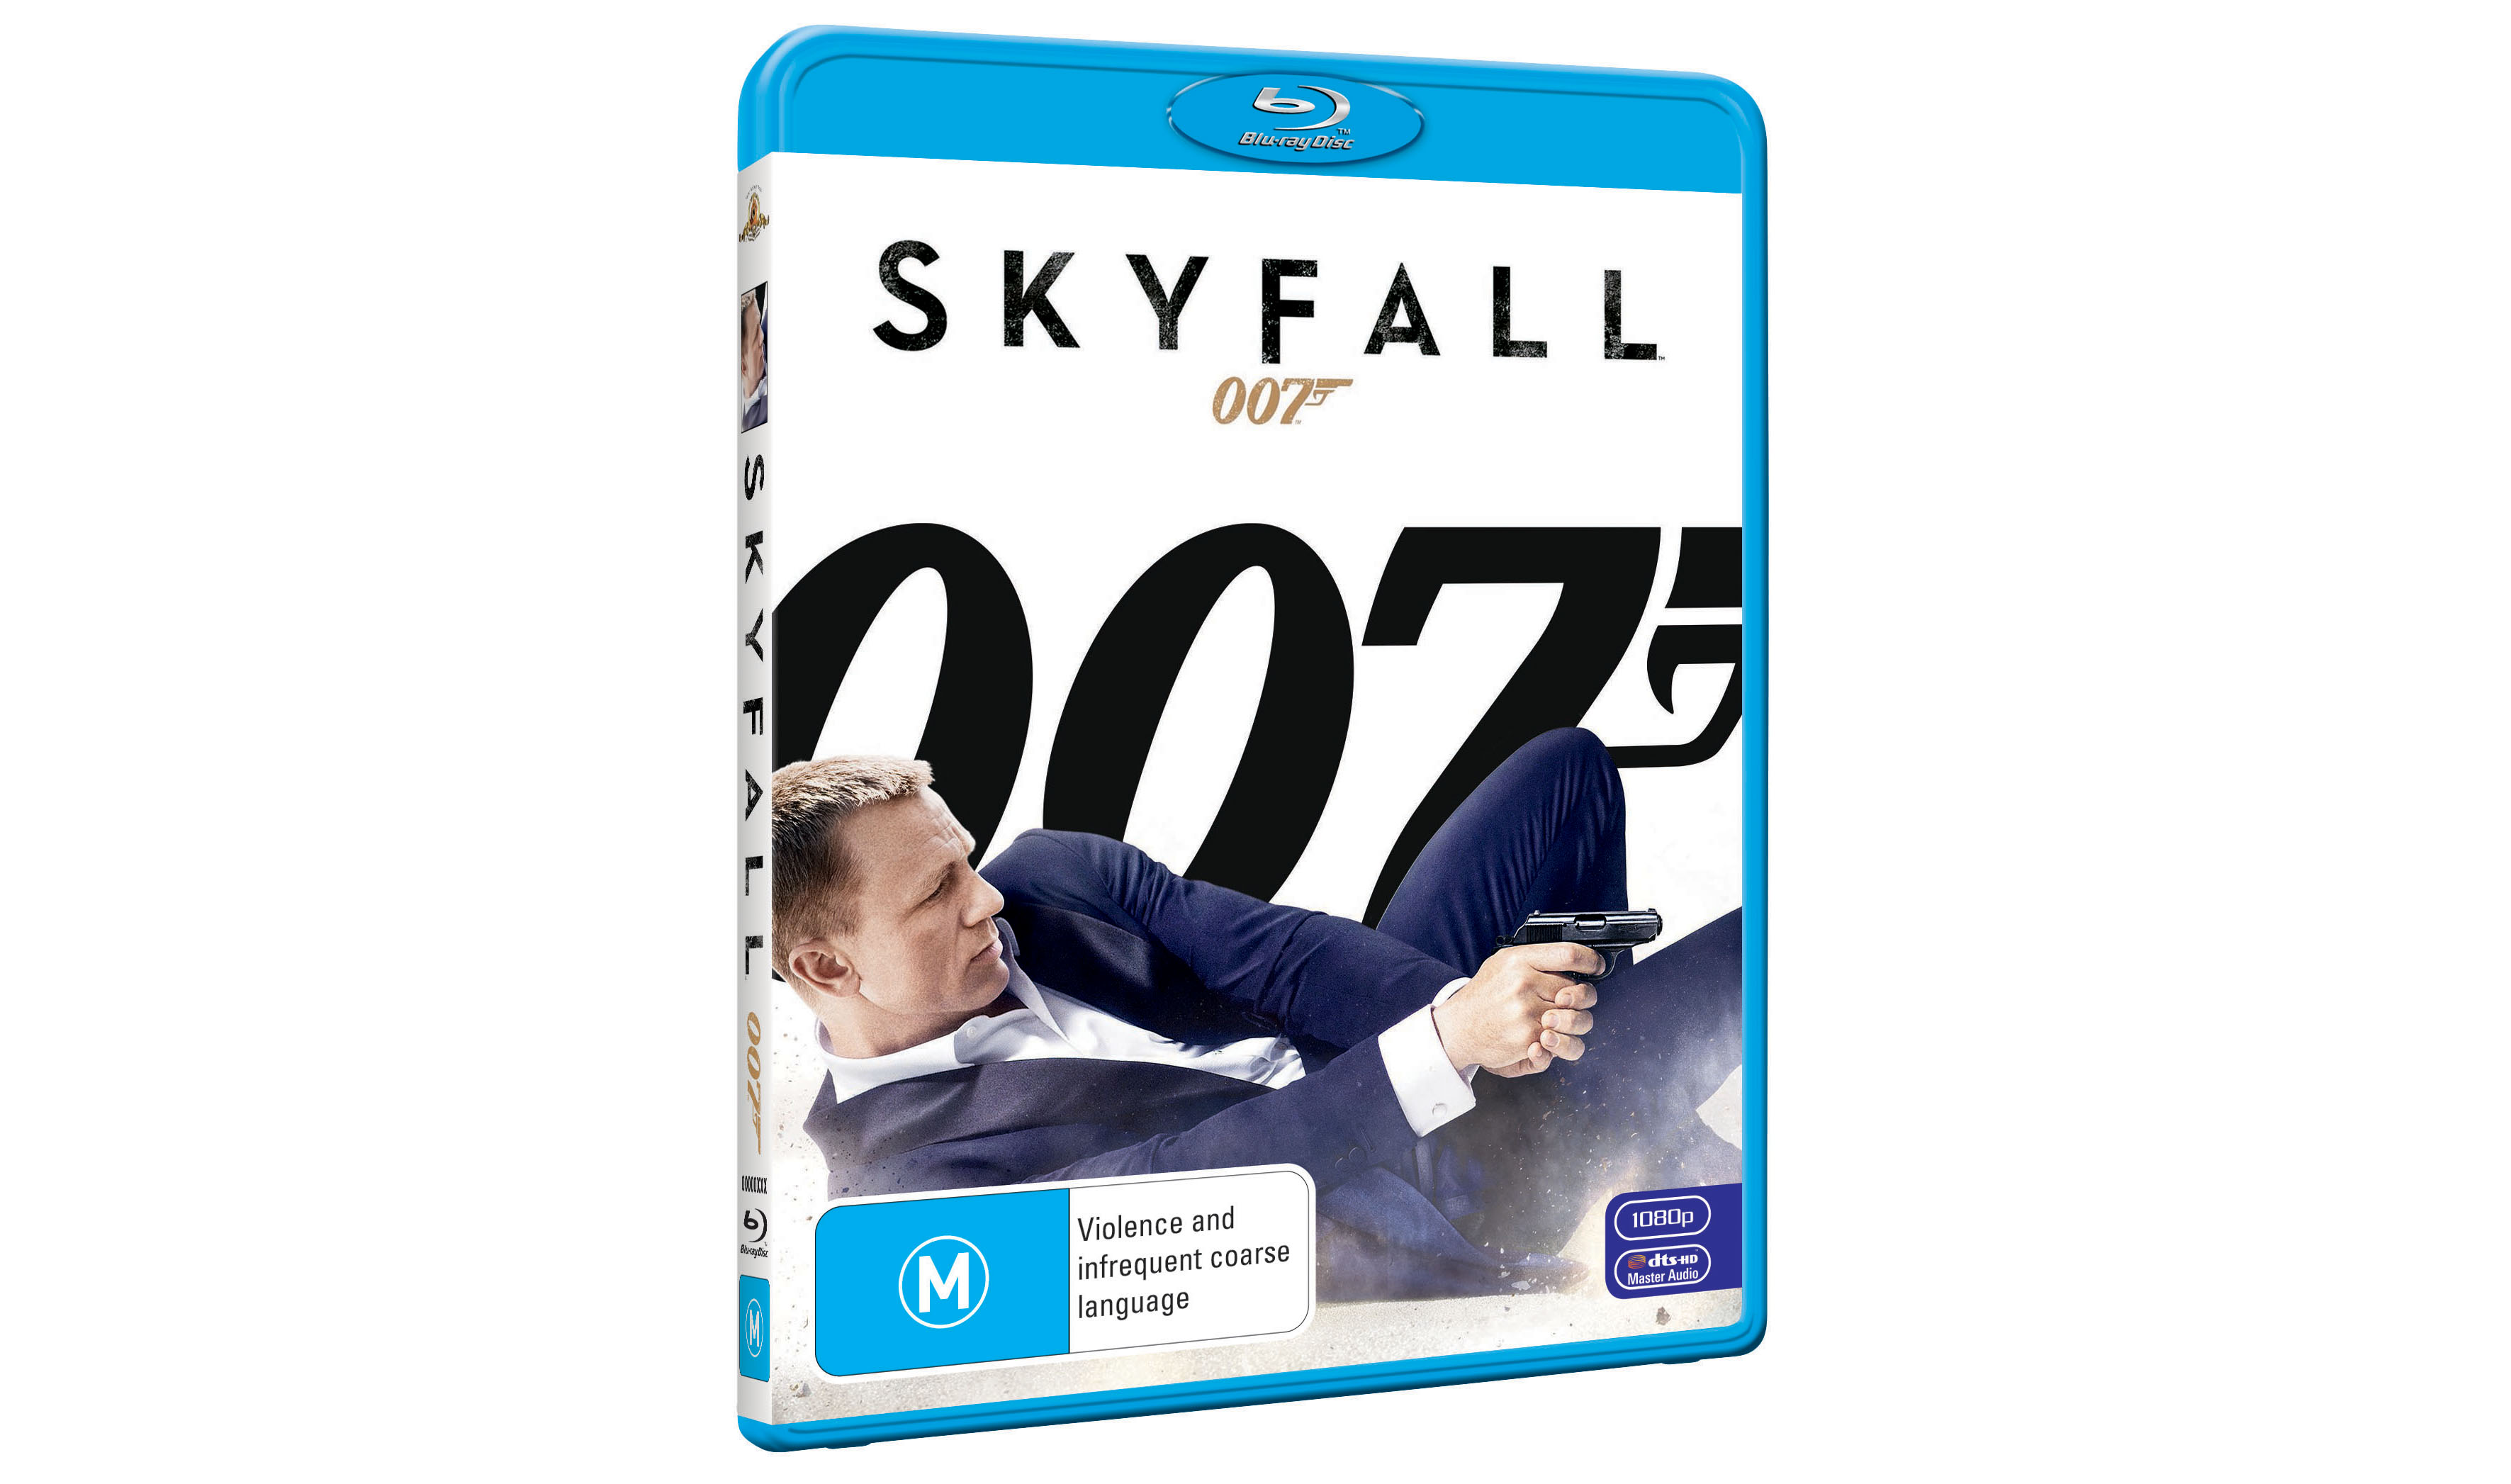 James Bond 007: Skyfall Australian Blu-ray cover